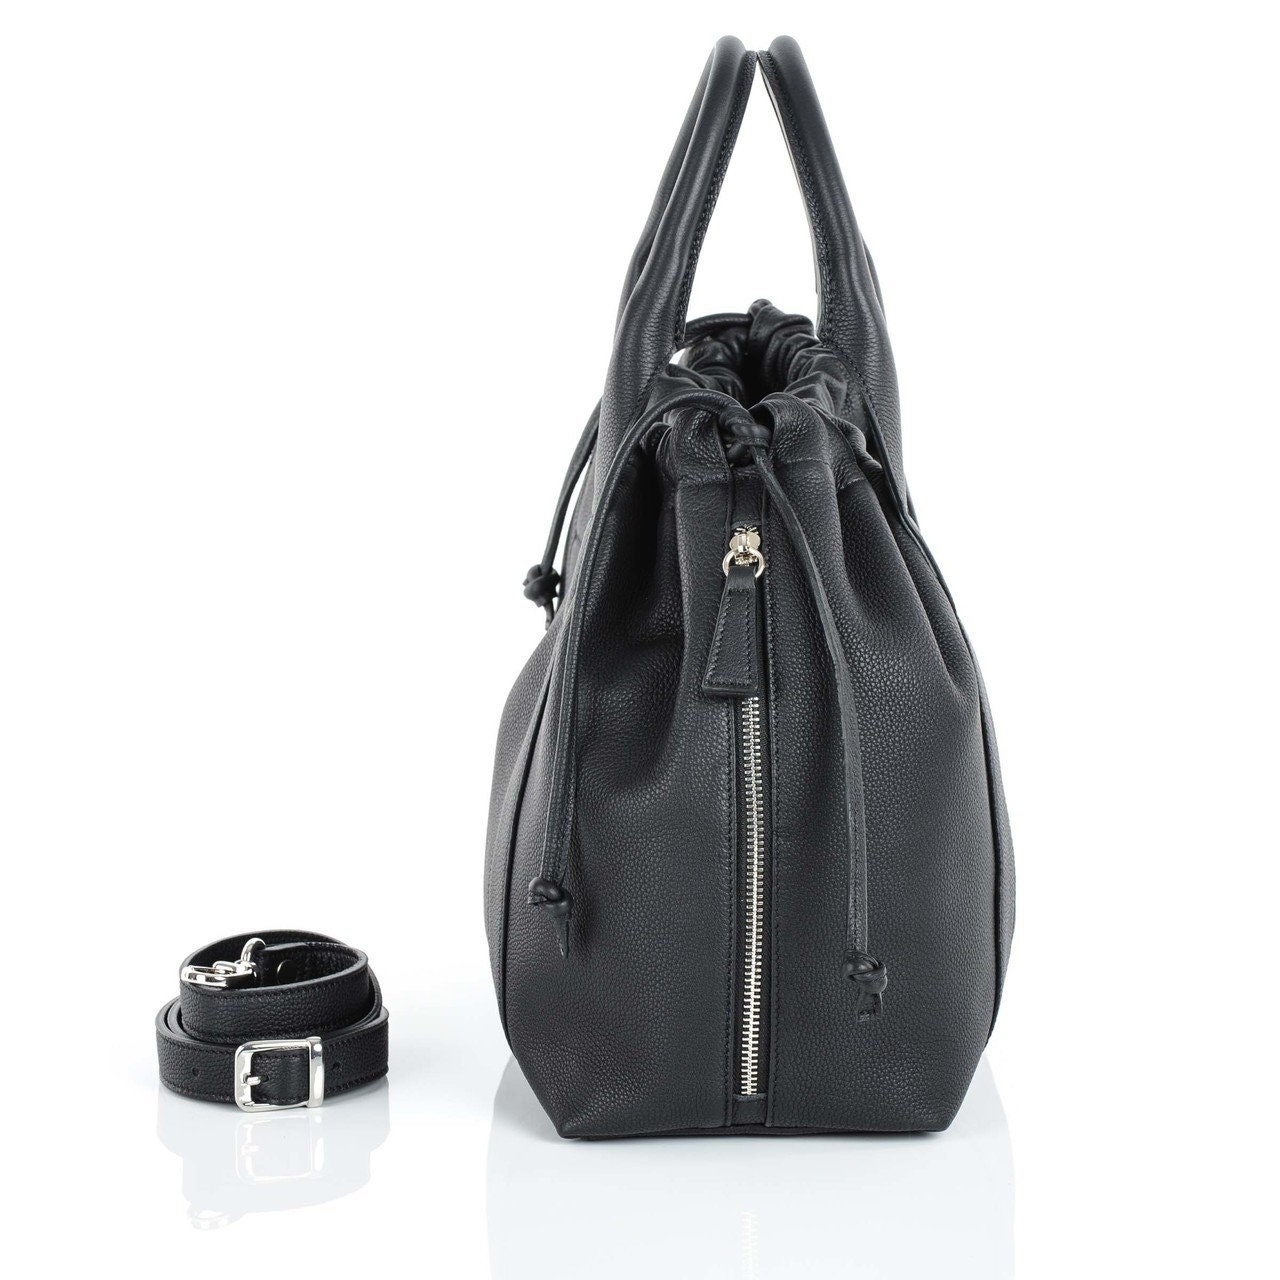 Elton // Black Leather Women's Handbag, Black Handbag, Italian Leather Women's Bag, Everyday Bag, Leather Work Bag.